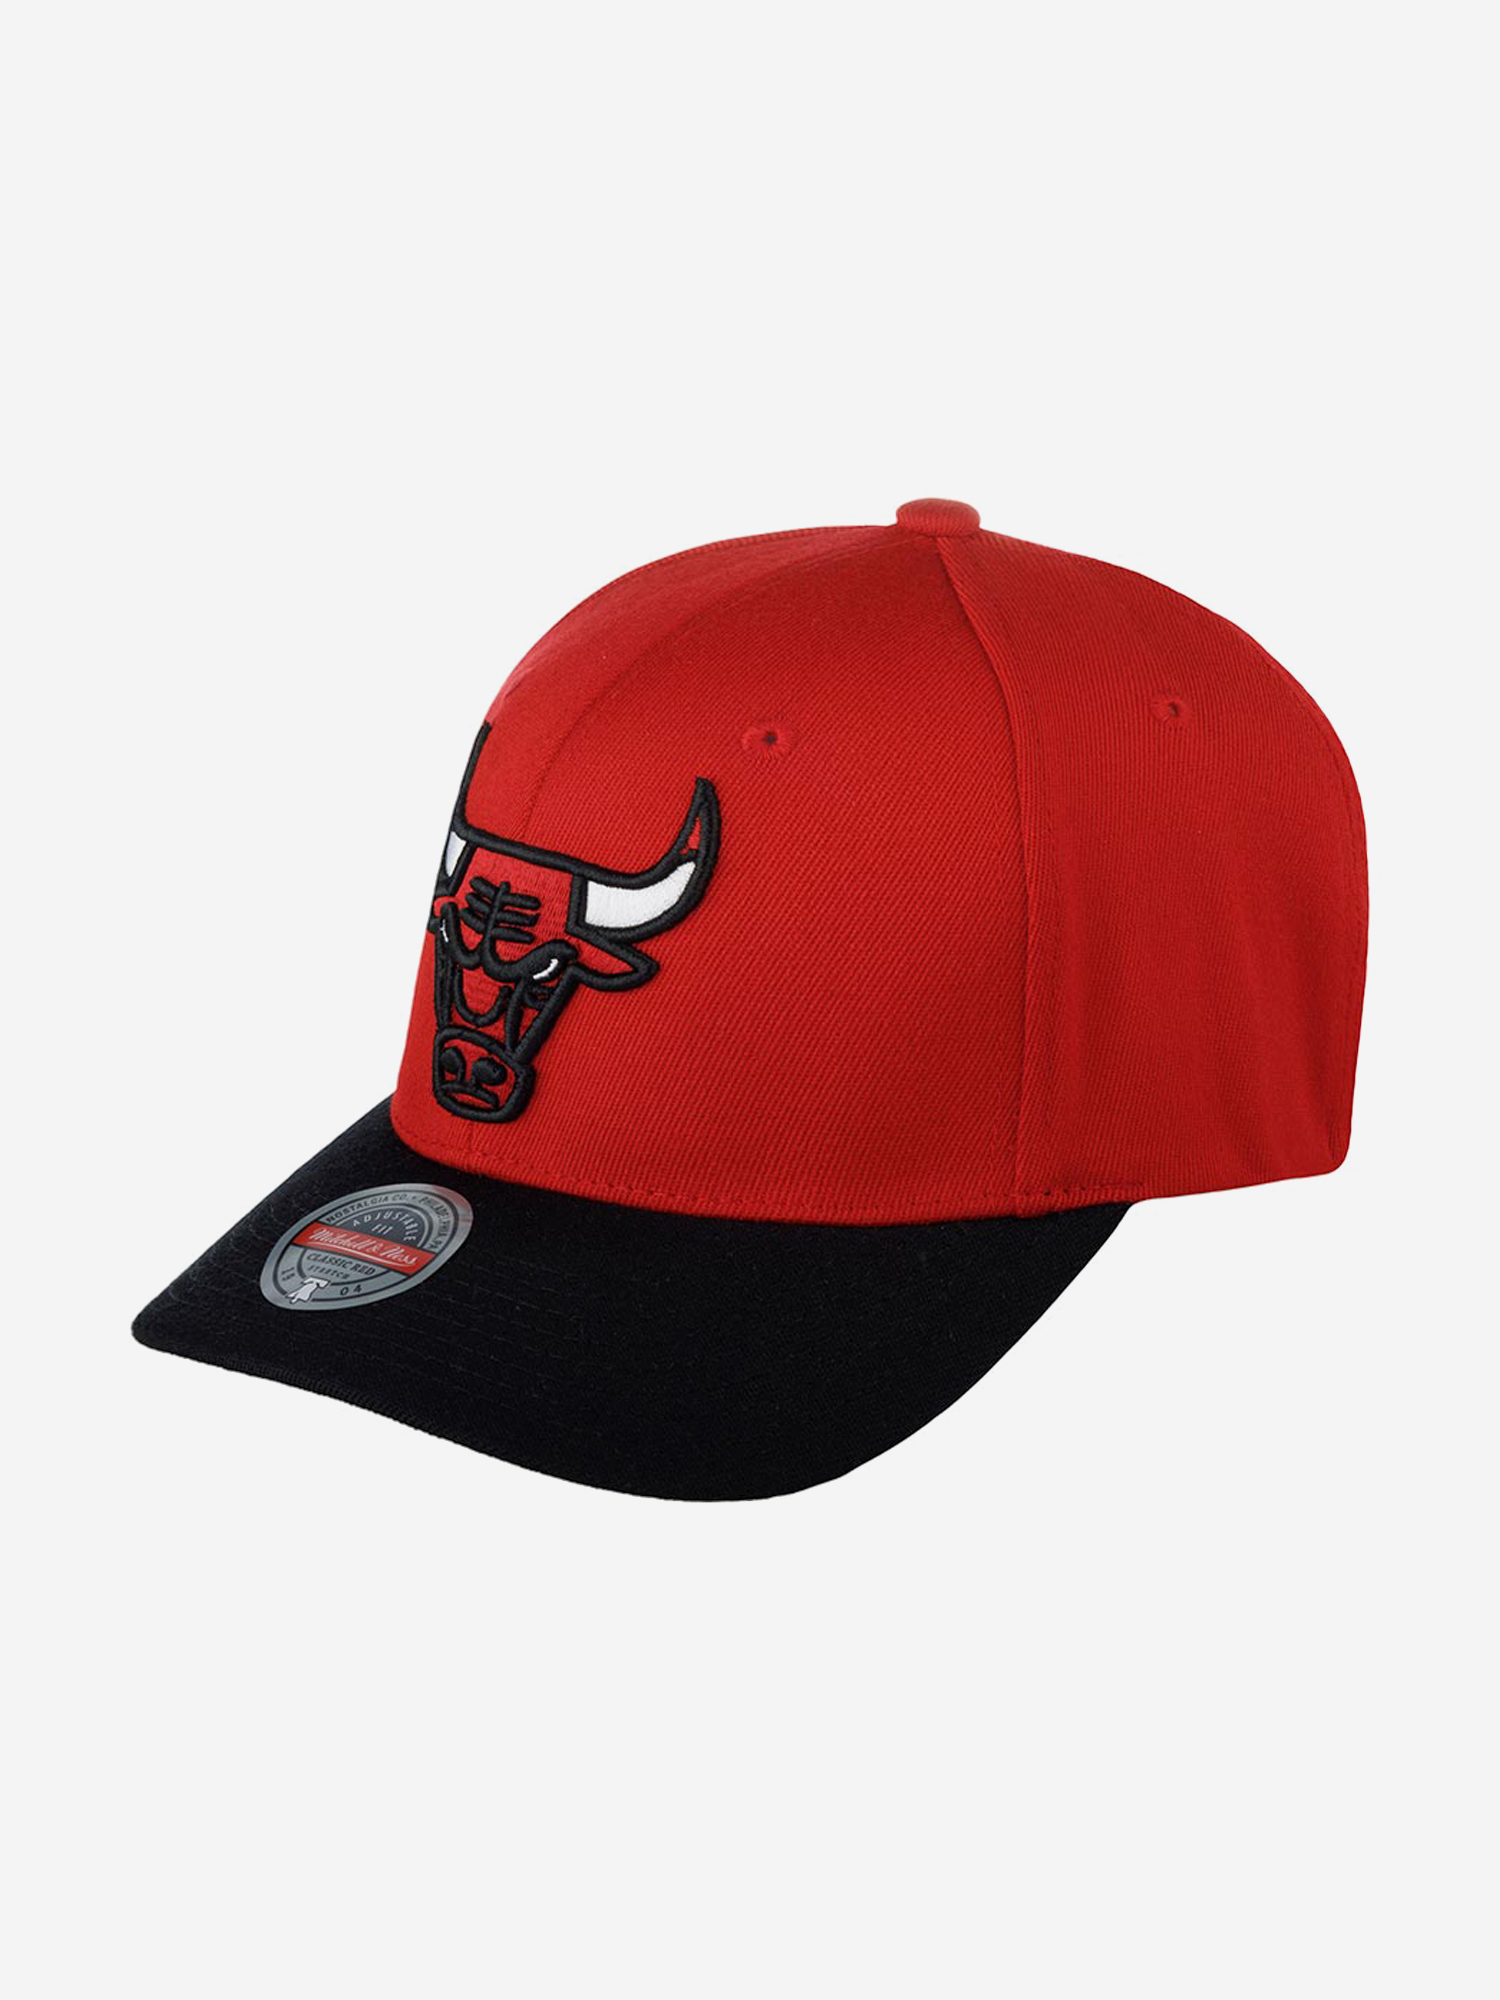 Бейсболка MITCHELL NESS HHSS3265-CBUYYPPPRDBK Chicago Bulls NBA (красный), Красный бейсболка mitchell ness hhss3265 cbuyyppprdbk chicago bulls nba красный красный